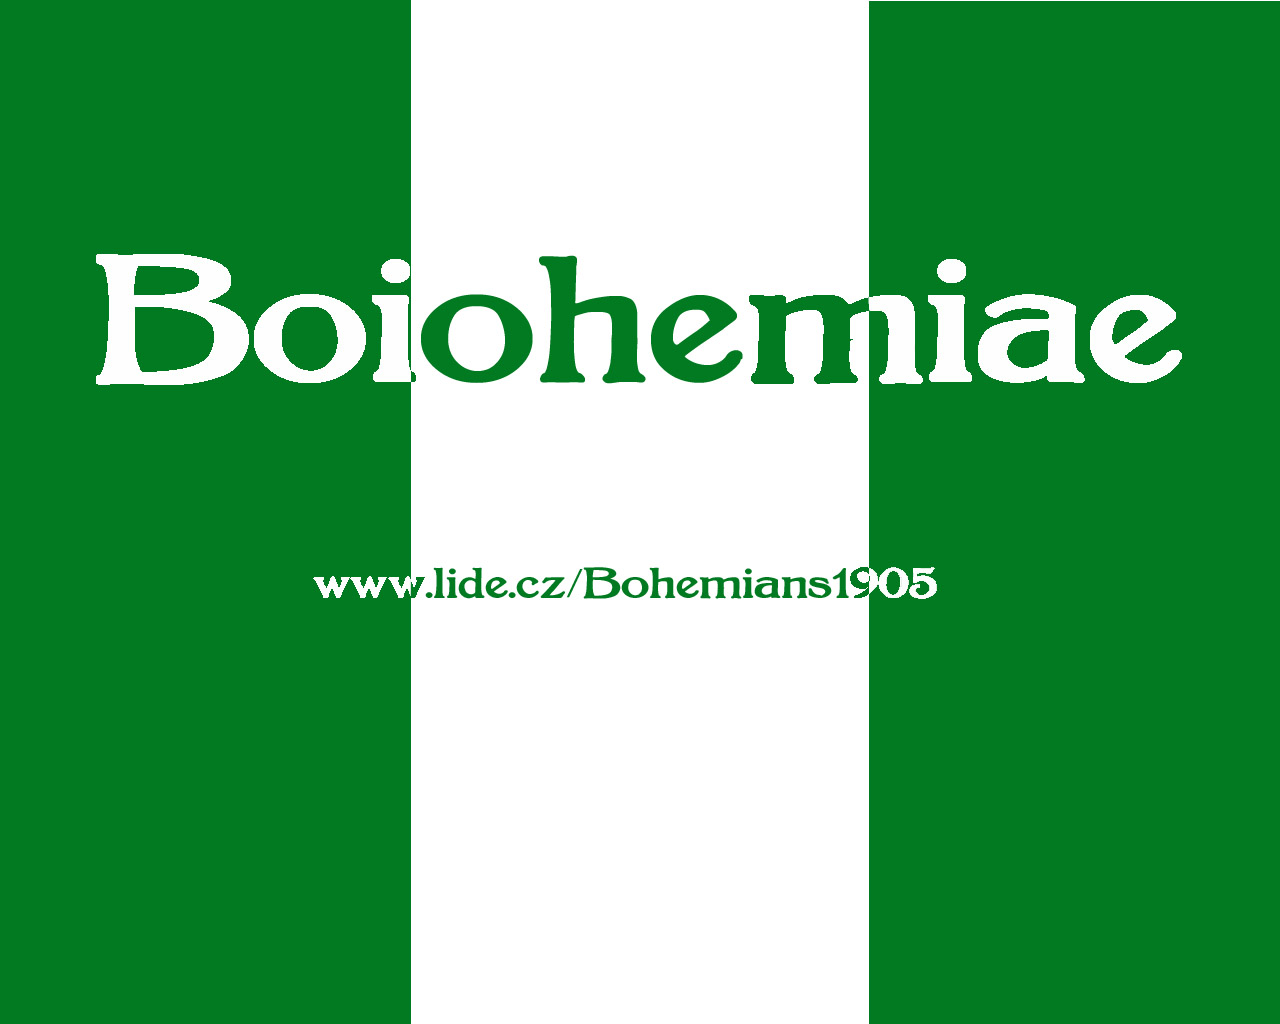 Vlajka Bohemianslide.jpg